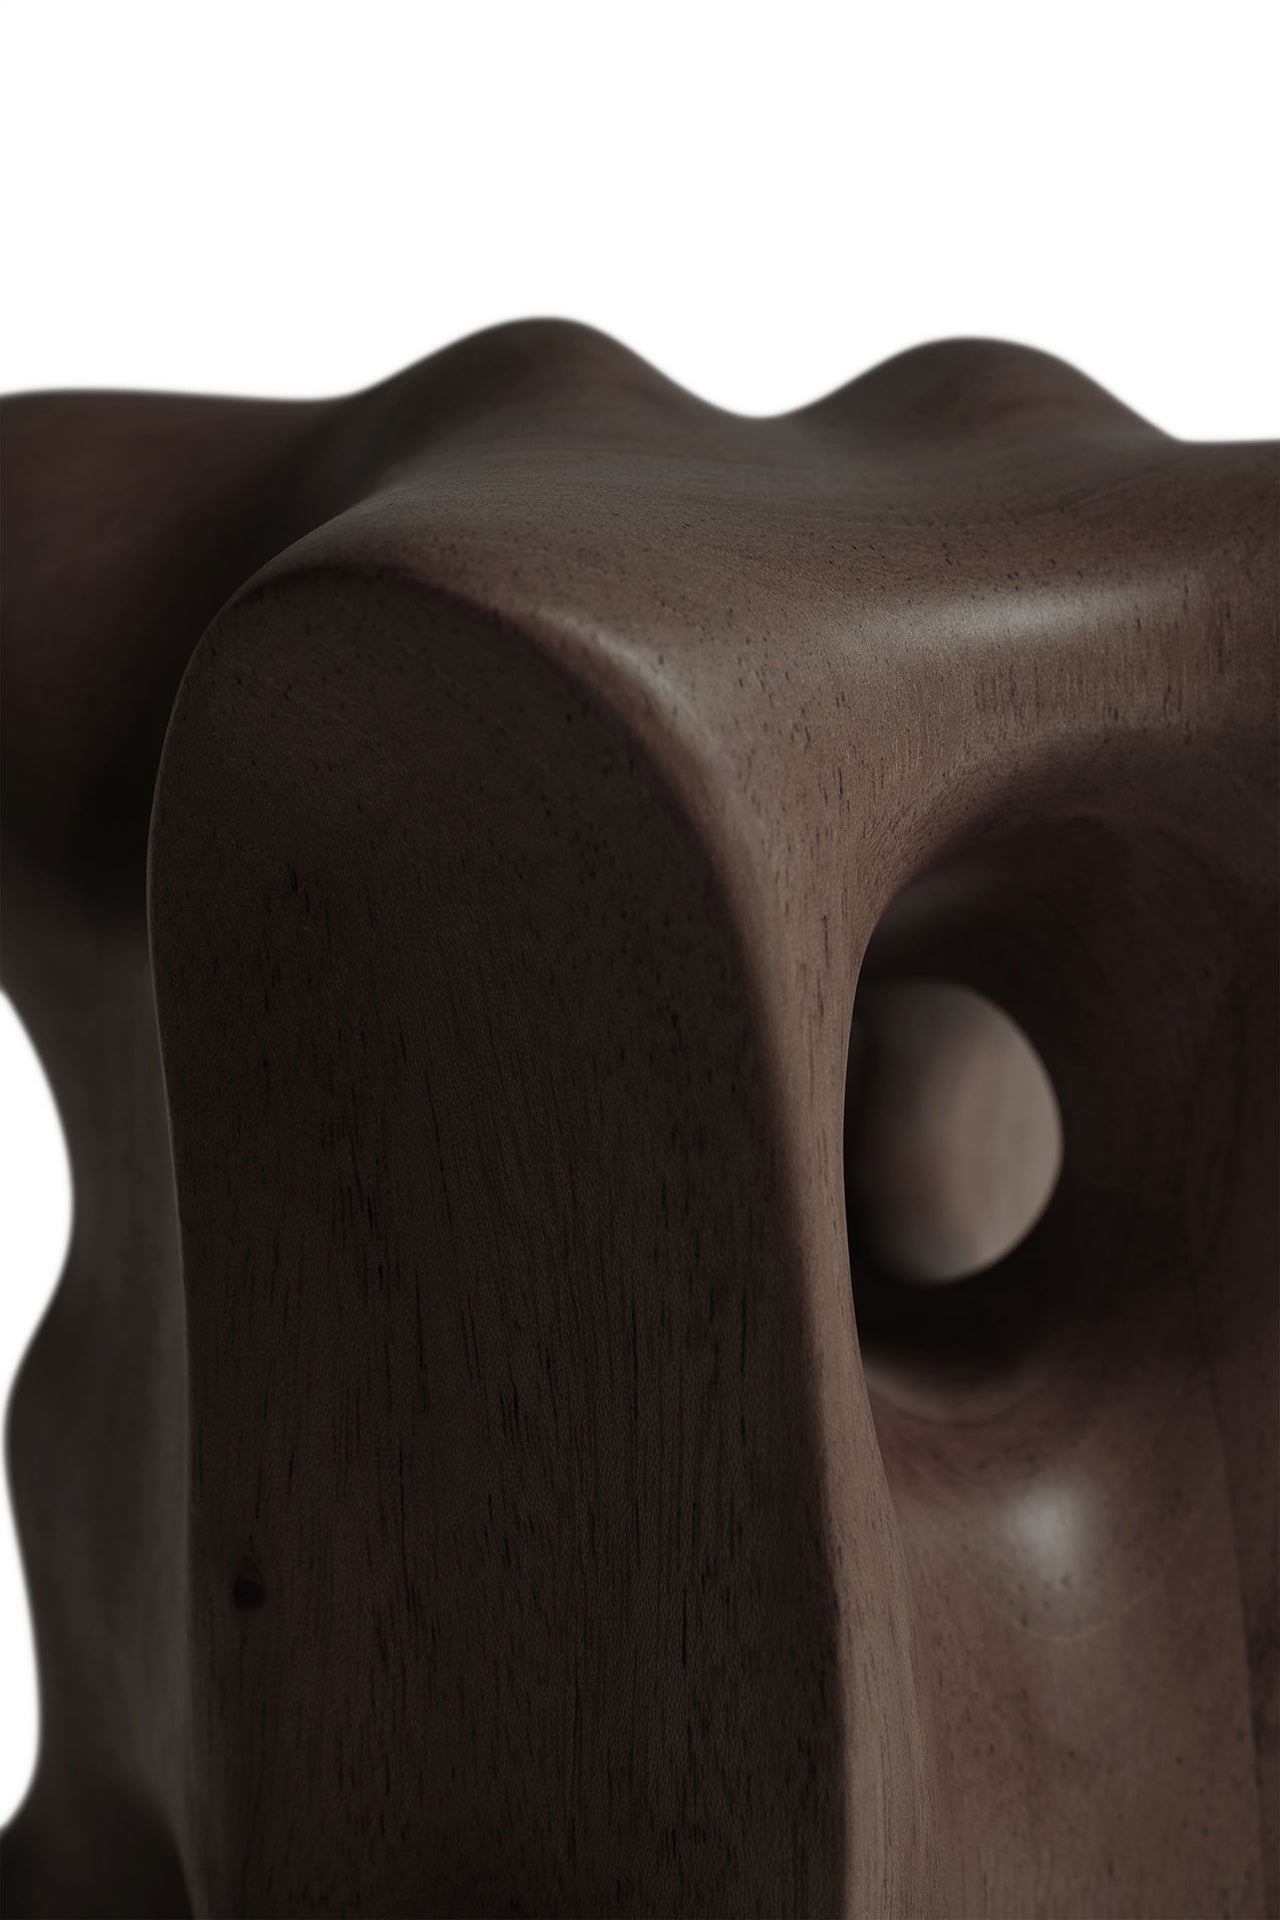 Dark Brown Organic sculpture